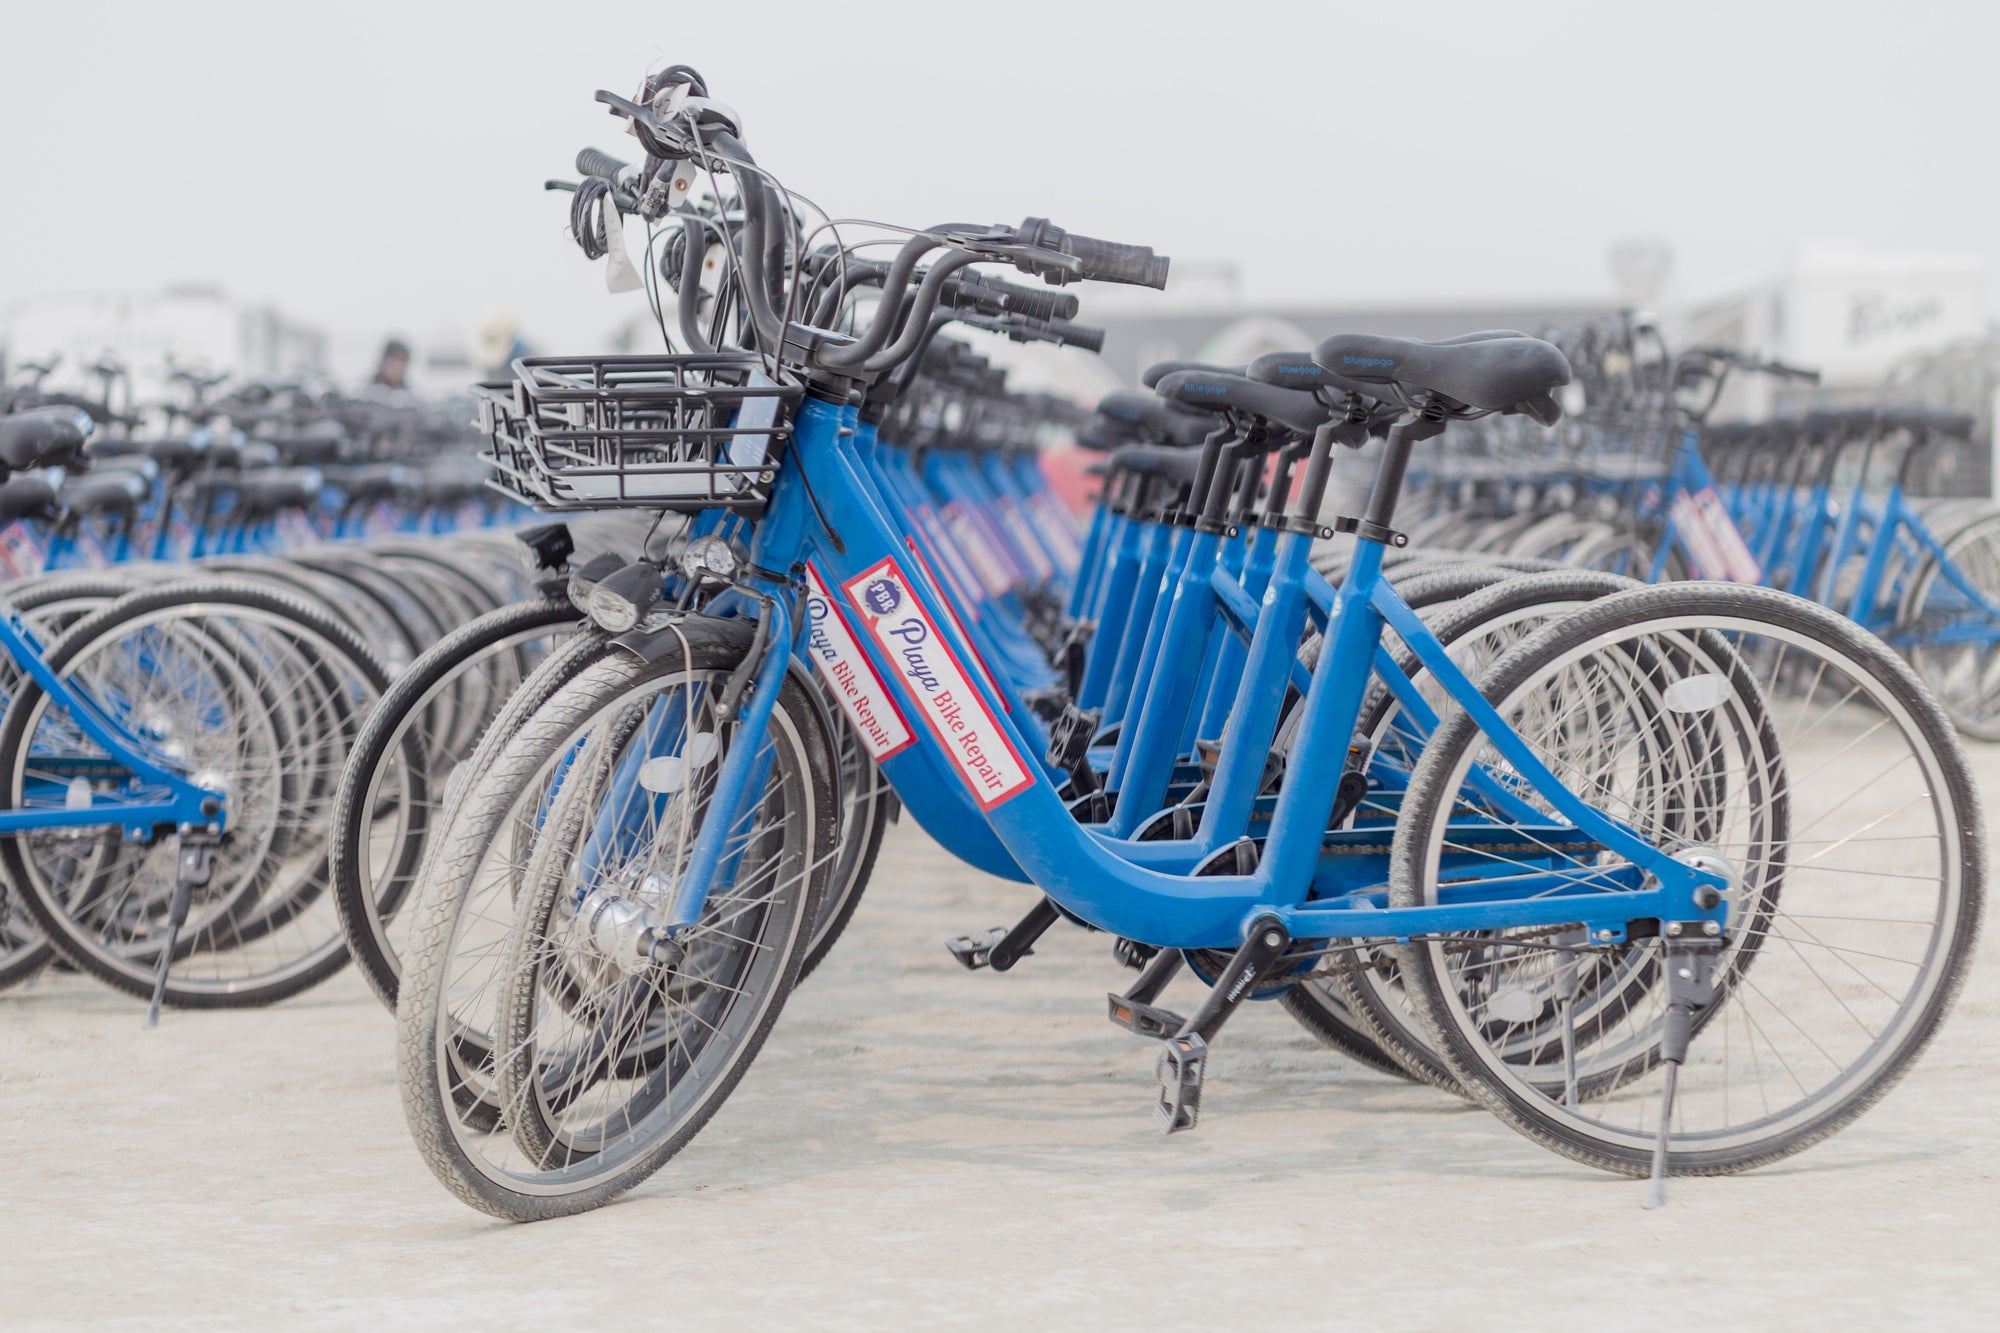 The Bike Culture of Burning Man: Wild Art on 2+ Wheels